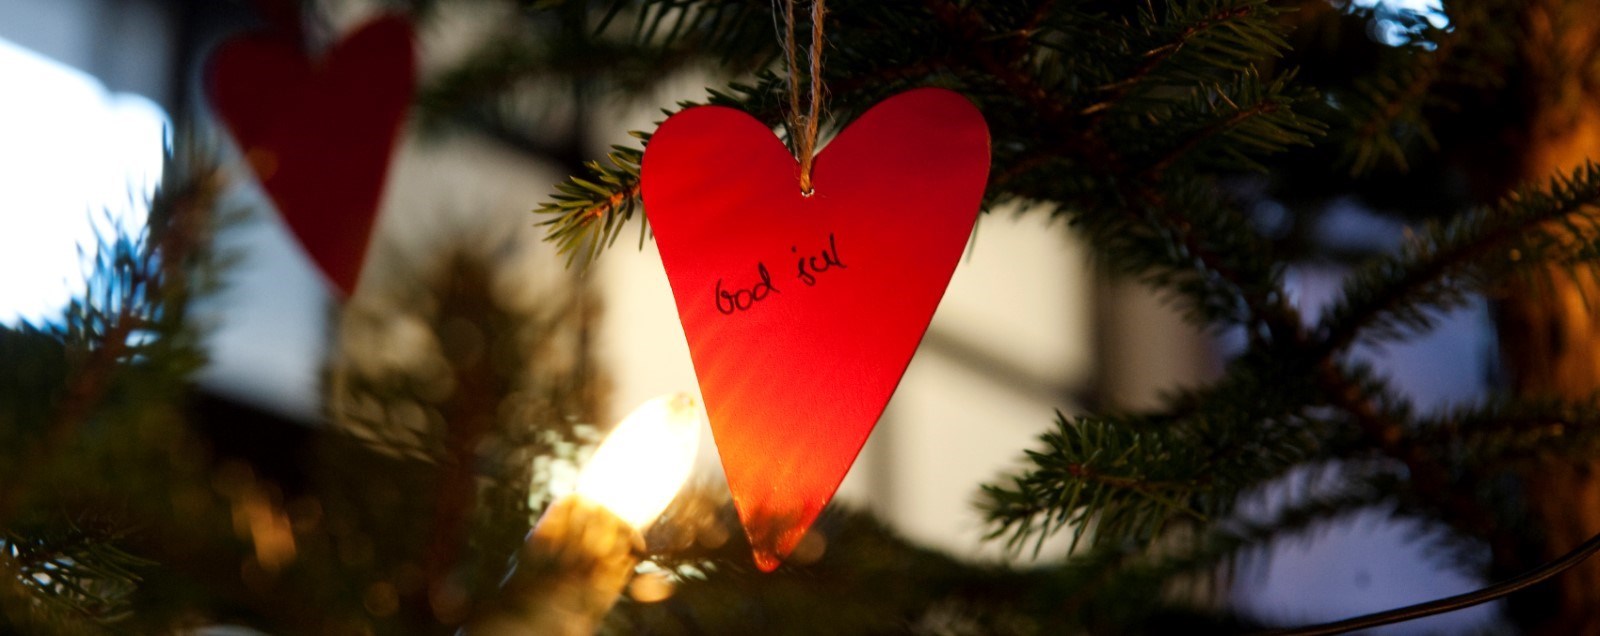 Jula er ei vanskeleg tid for mange. I år gjev Røde Kors i Sogn og Fjordane julegleder til nærmare 1500 born. Foto: Olav A. Saltbones/Røde Kors